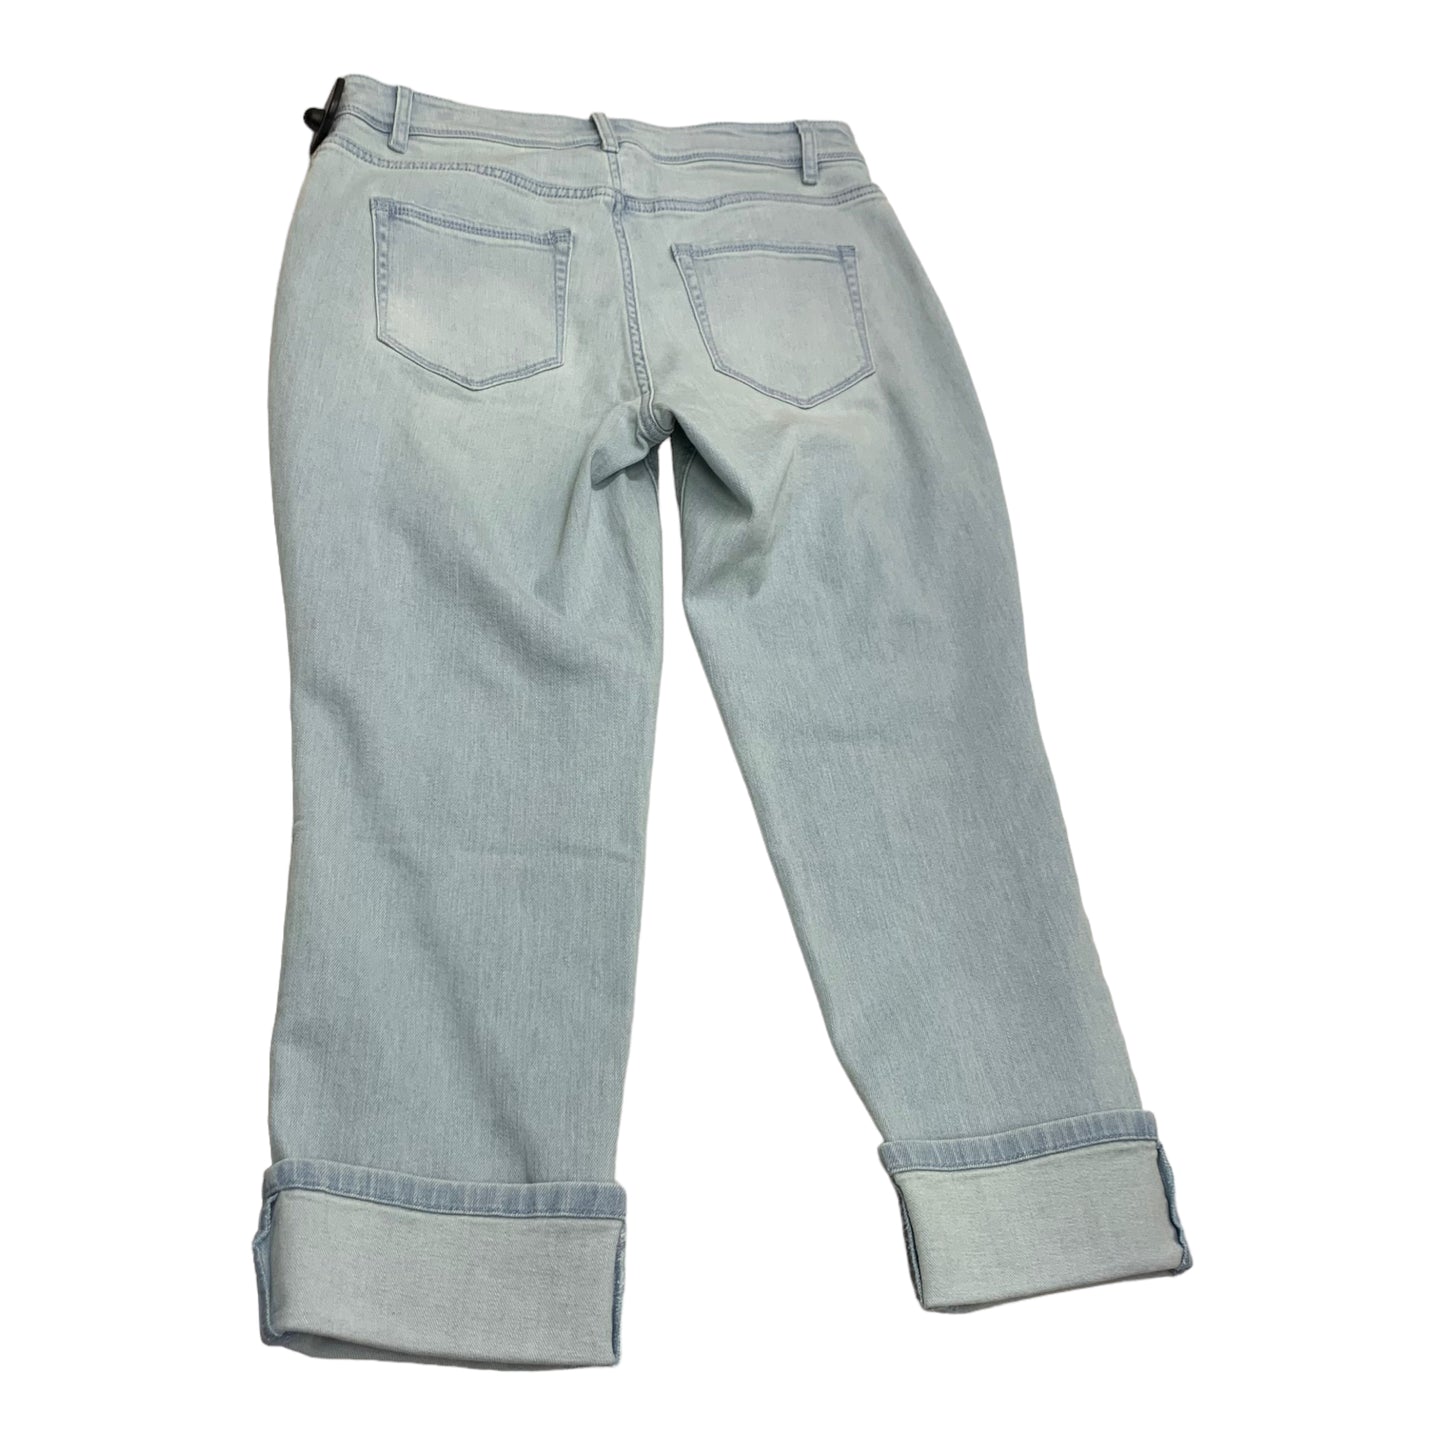 Jeans Cropped By J Jill  Size: Petite